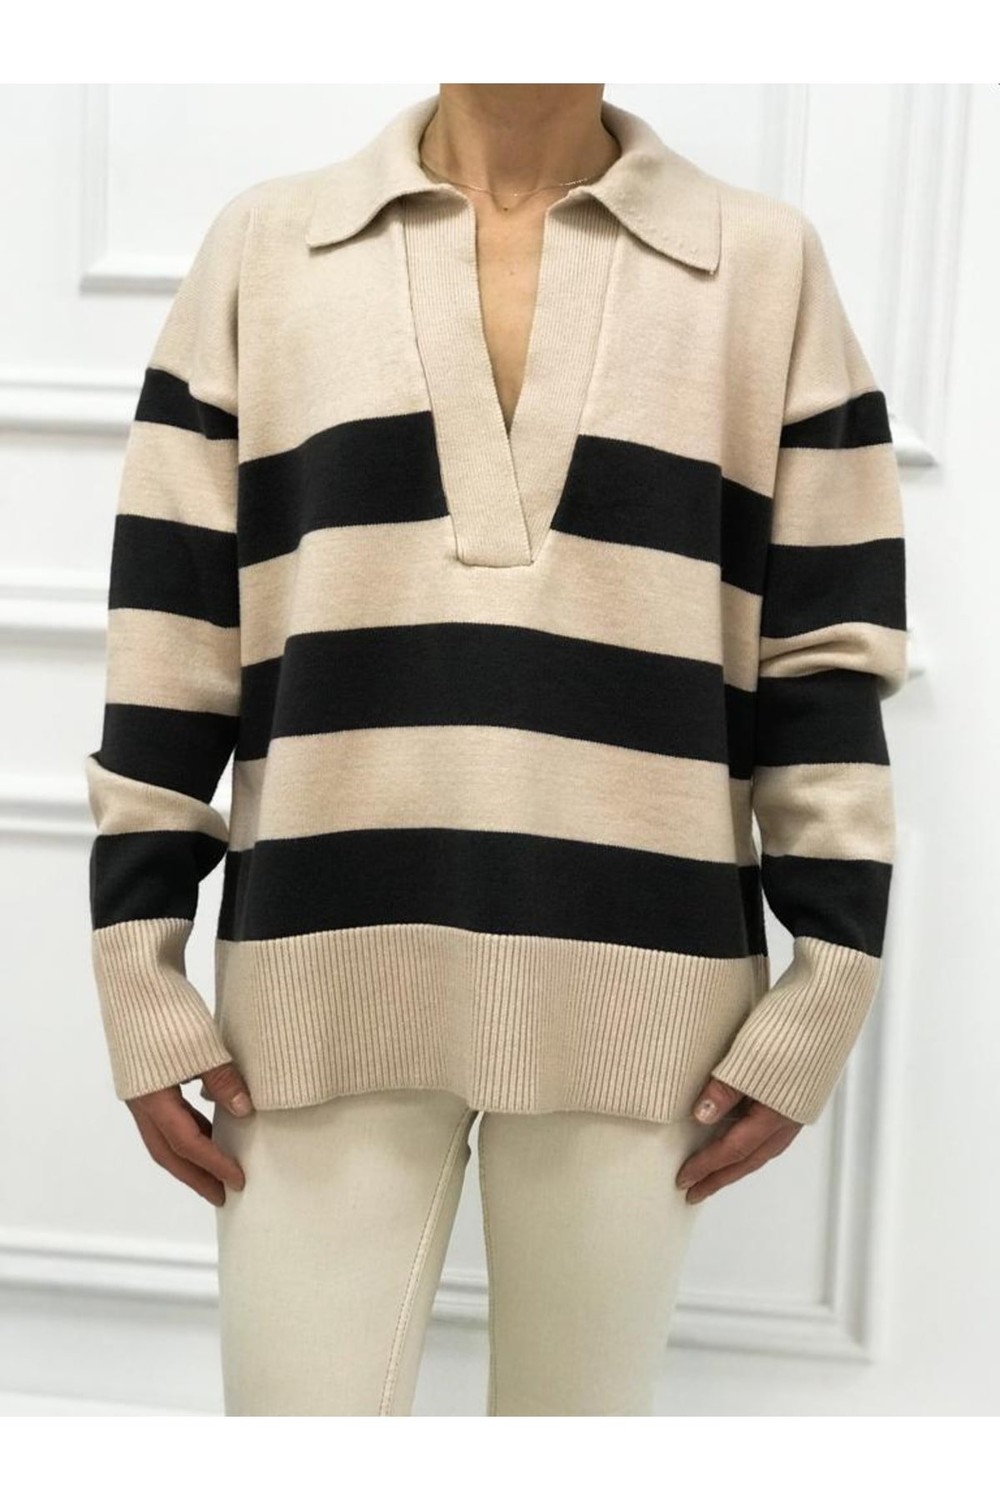 Dilvin 10325 Polo Neck Striped Sweater